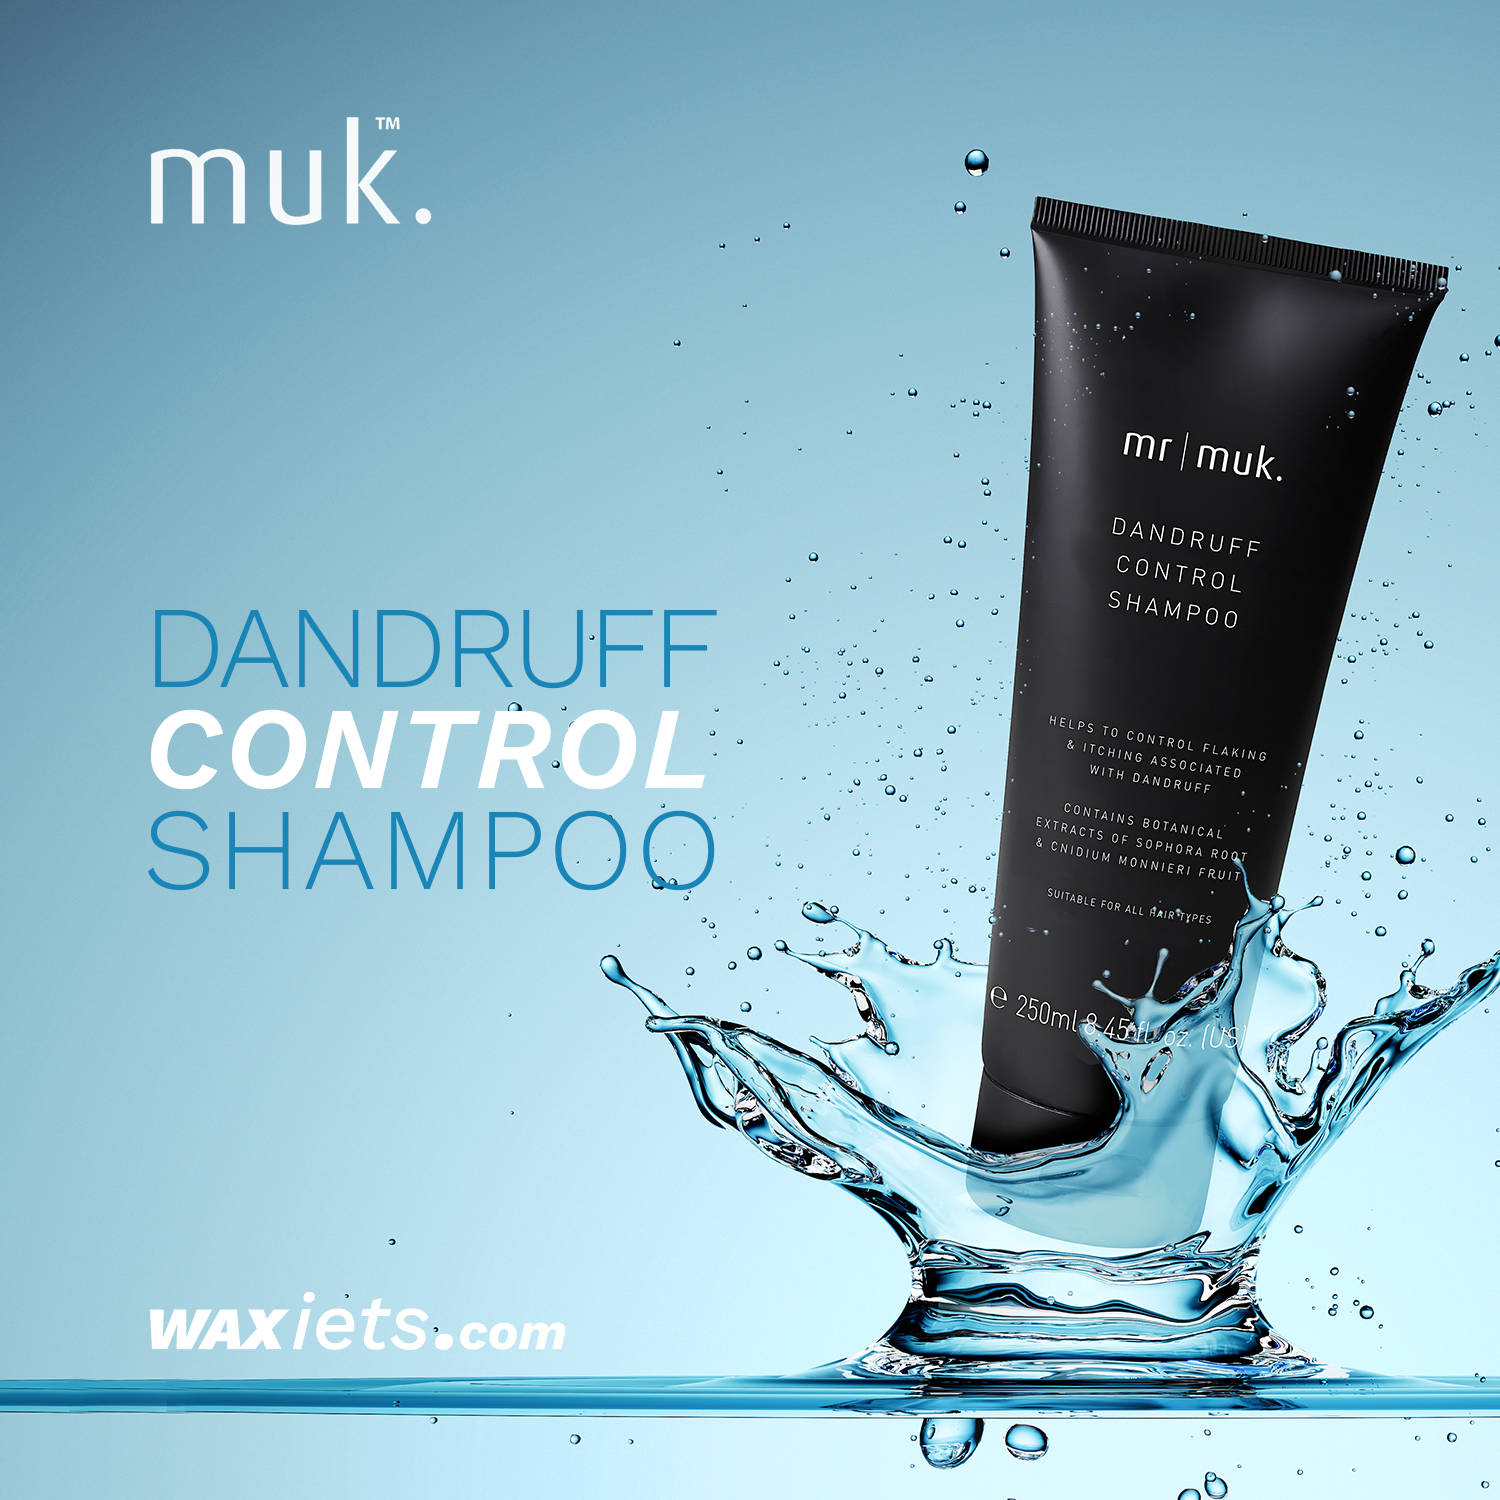 MR MUK HAIR – Dandruff Control Shampoo – 250ml